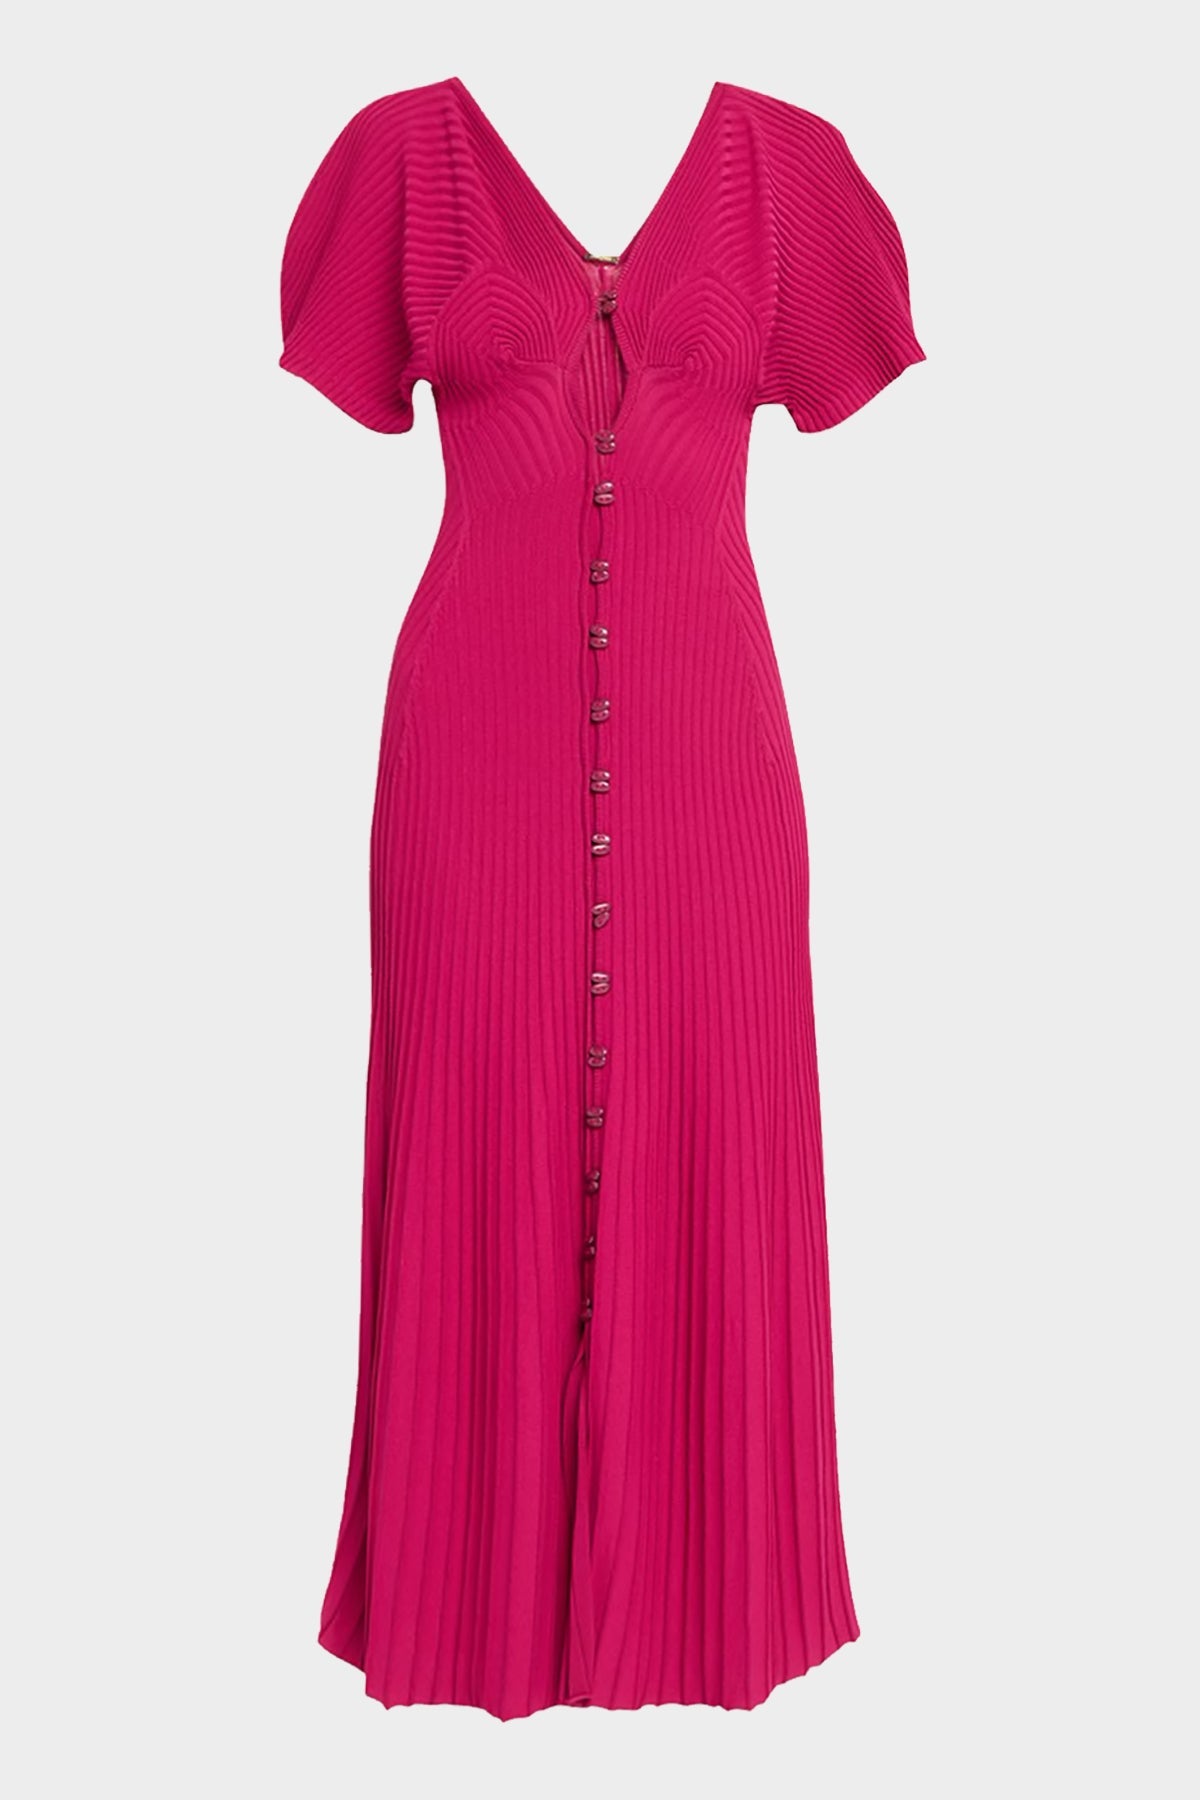 Halsey Knit Dress in Carmine - shop-olivia.com